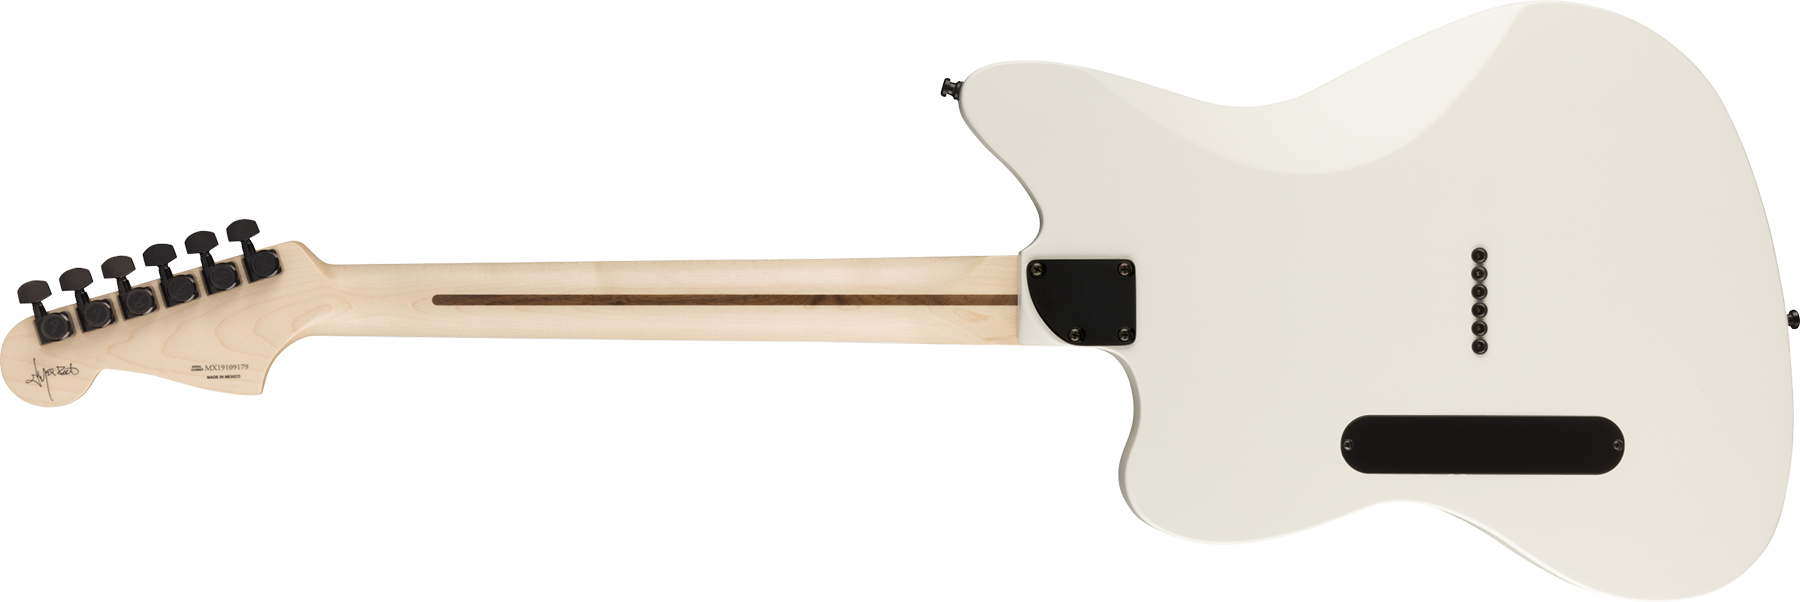 Fender Jim Root Jazzmaster V4 Mex Signature Hh Emg Ht Eb - Artic White - Retro-Rock-E-Gitarre - Variation 1